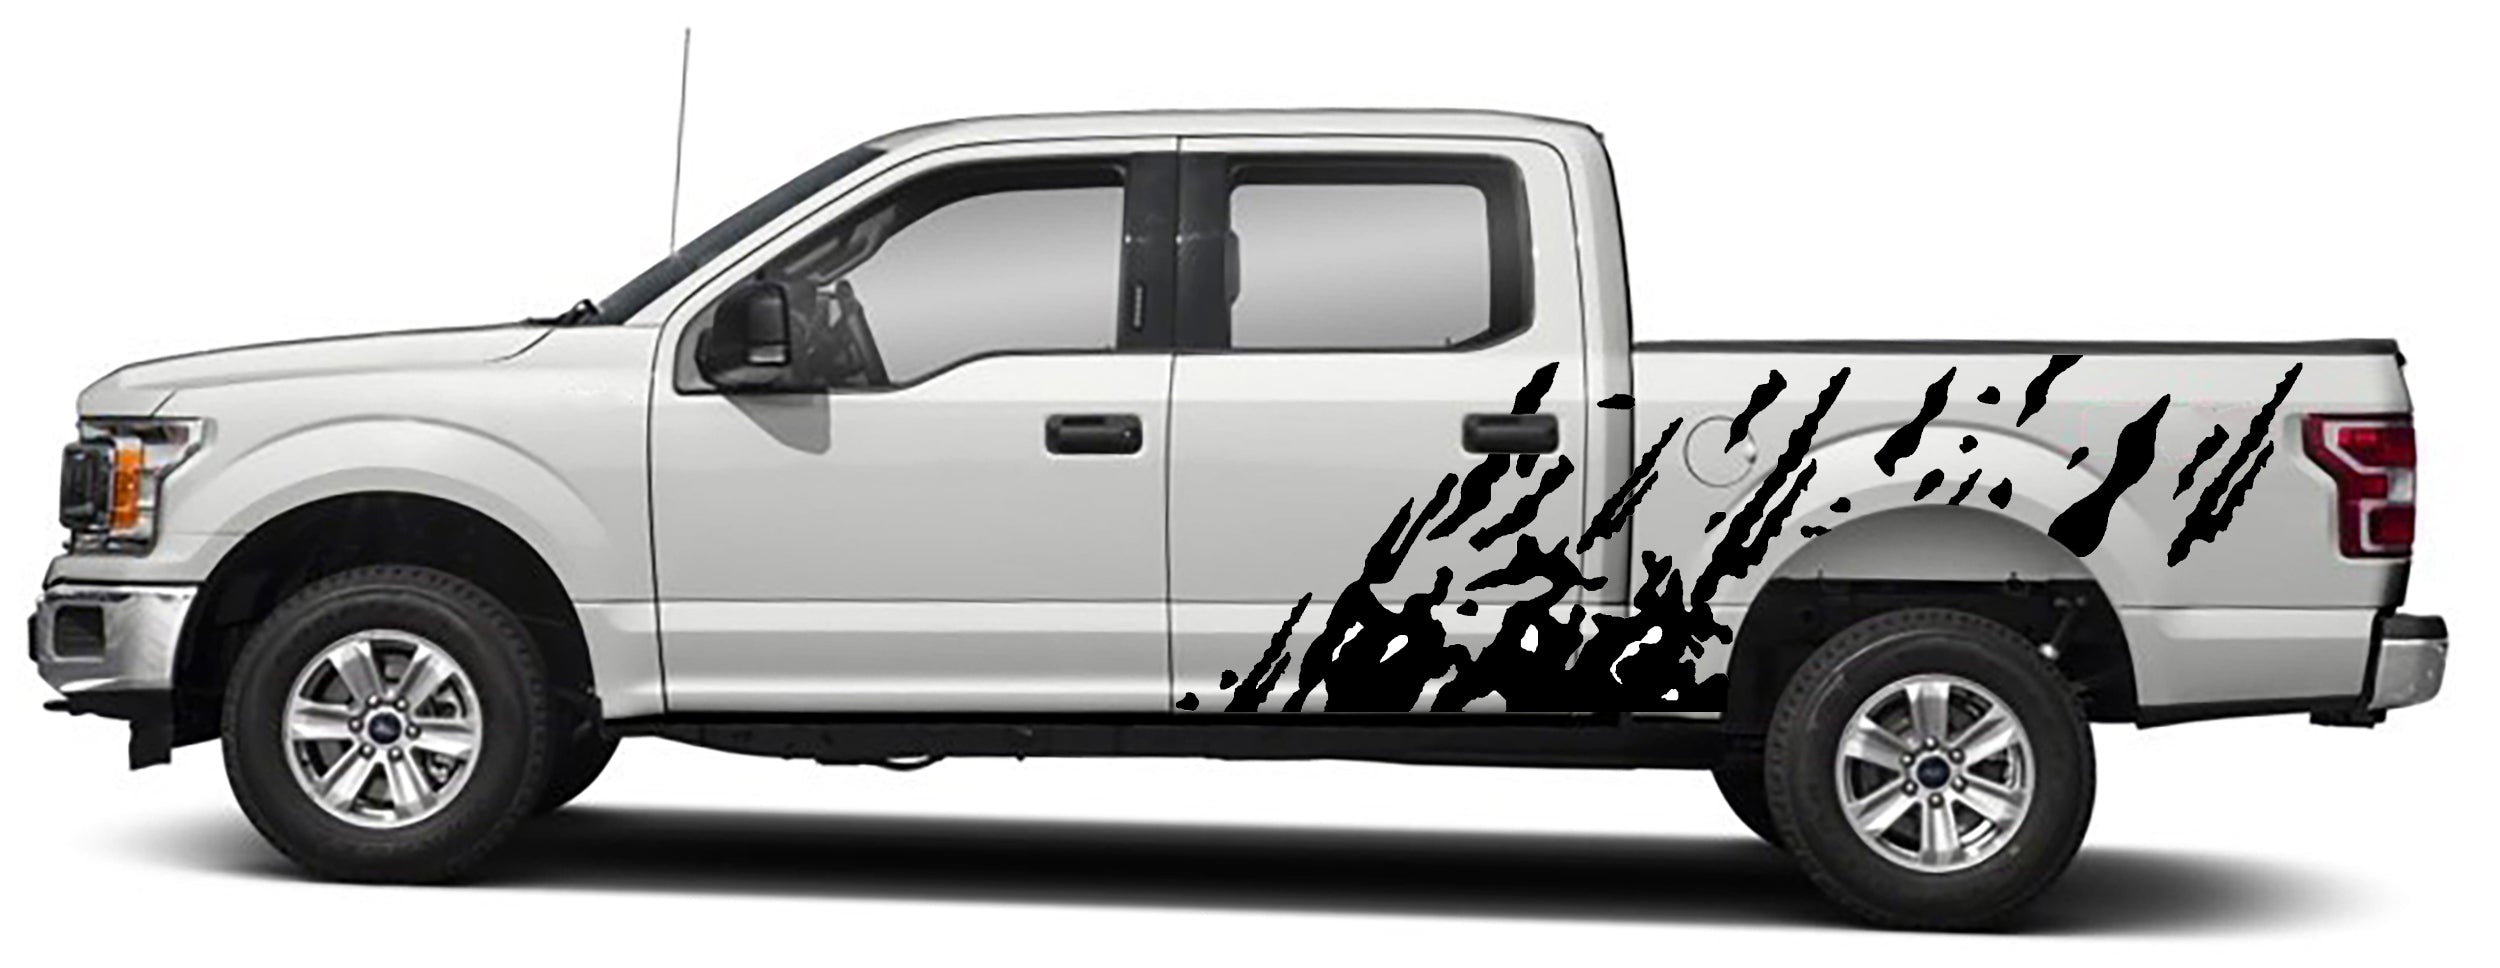 Ford F-150 Mud Splash Side Decals (Pair) : Vinyl Graphics Kit Fits (2015-2020)